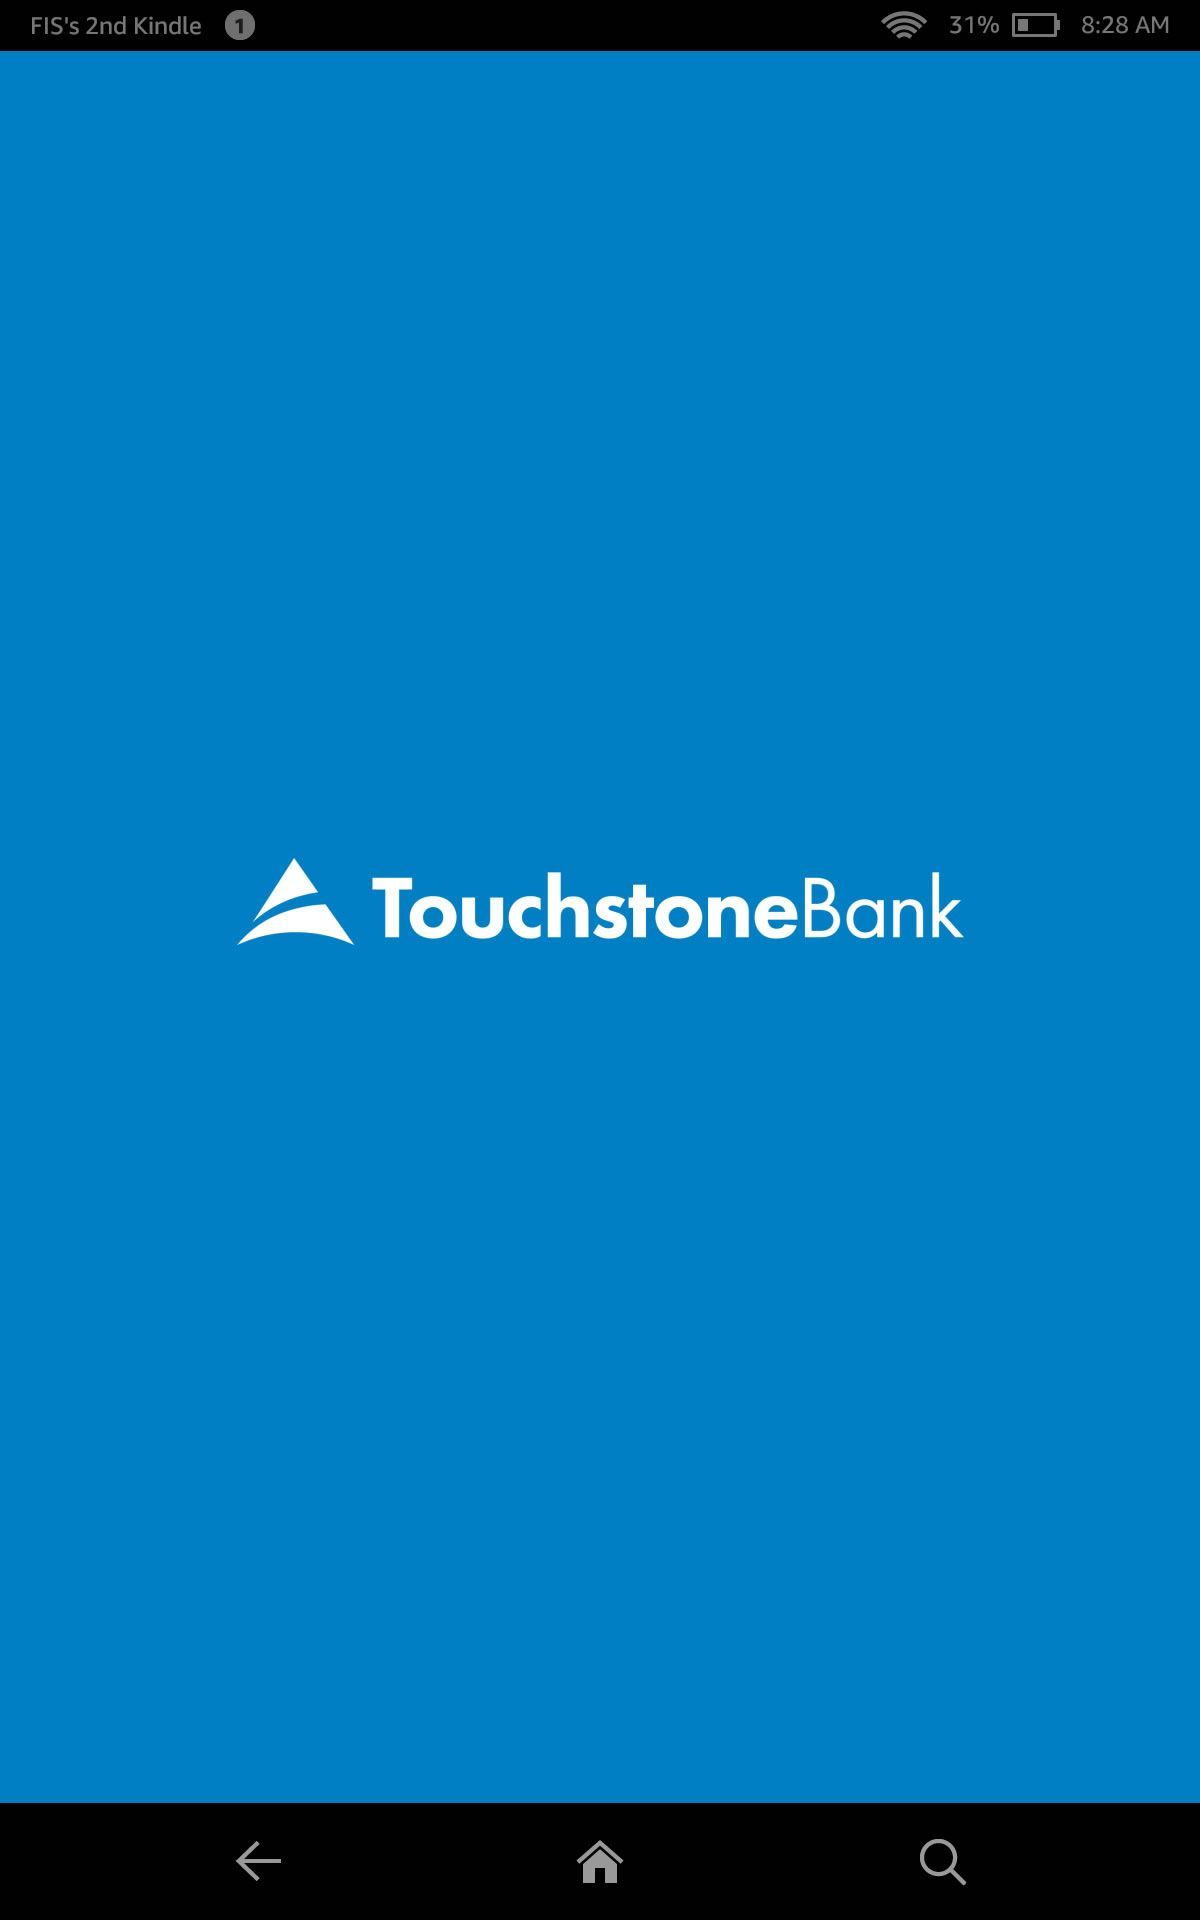 Touchstone Bank Mobile